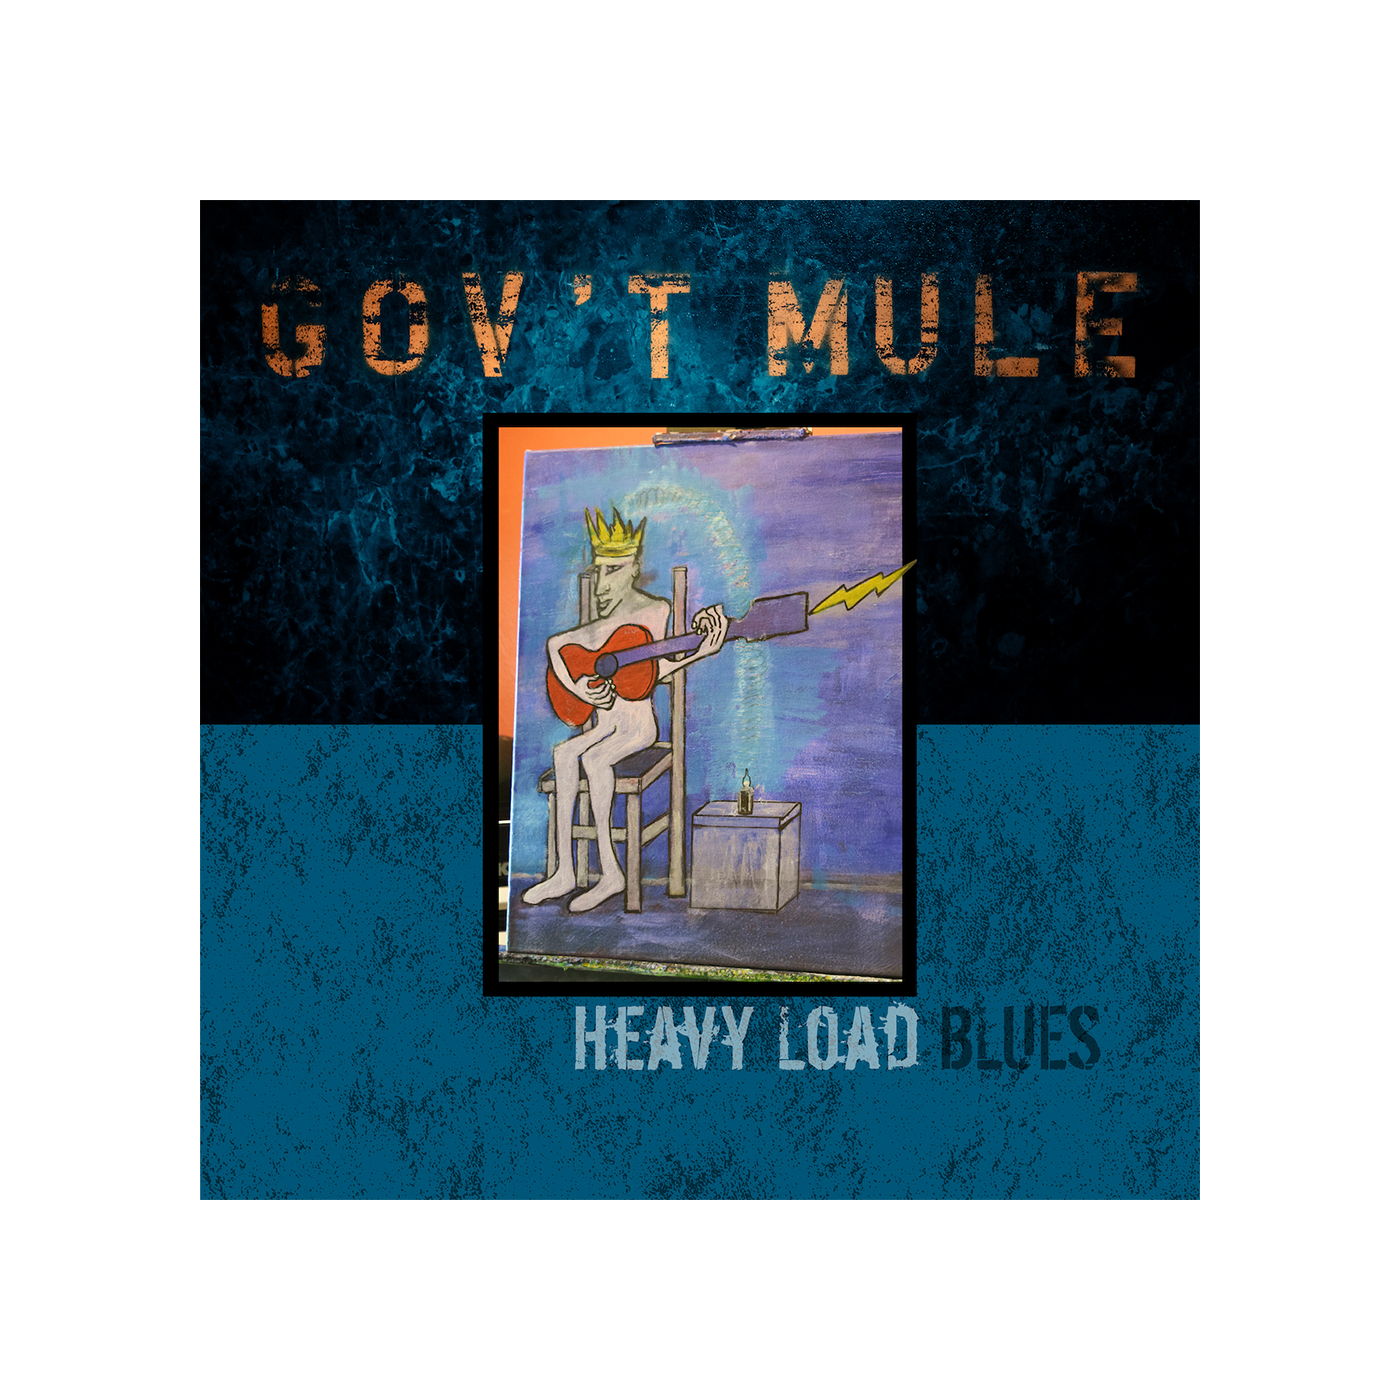 Heavy Load Blues Digital Album